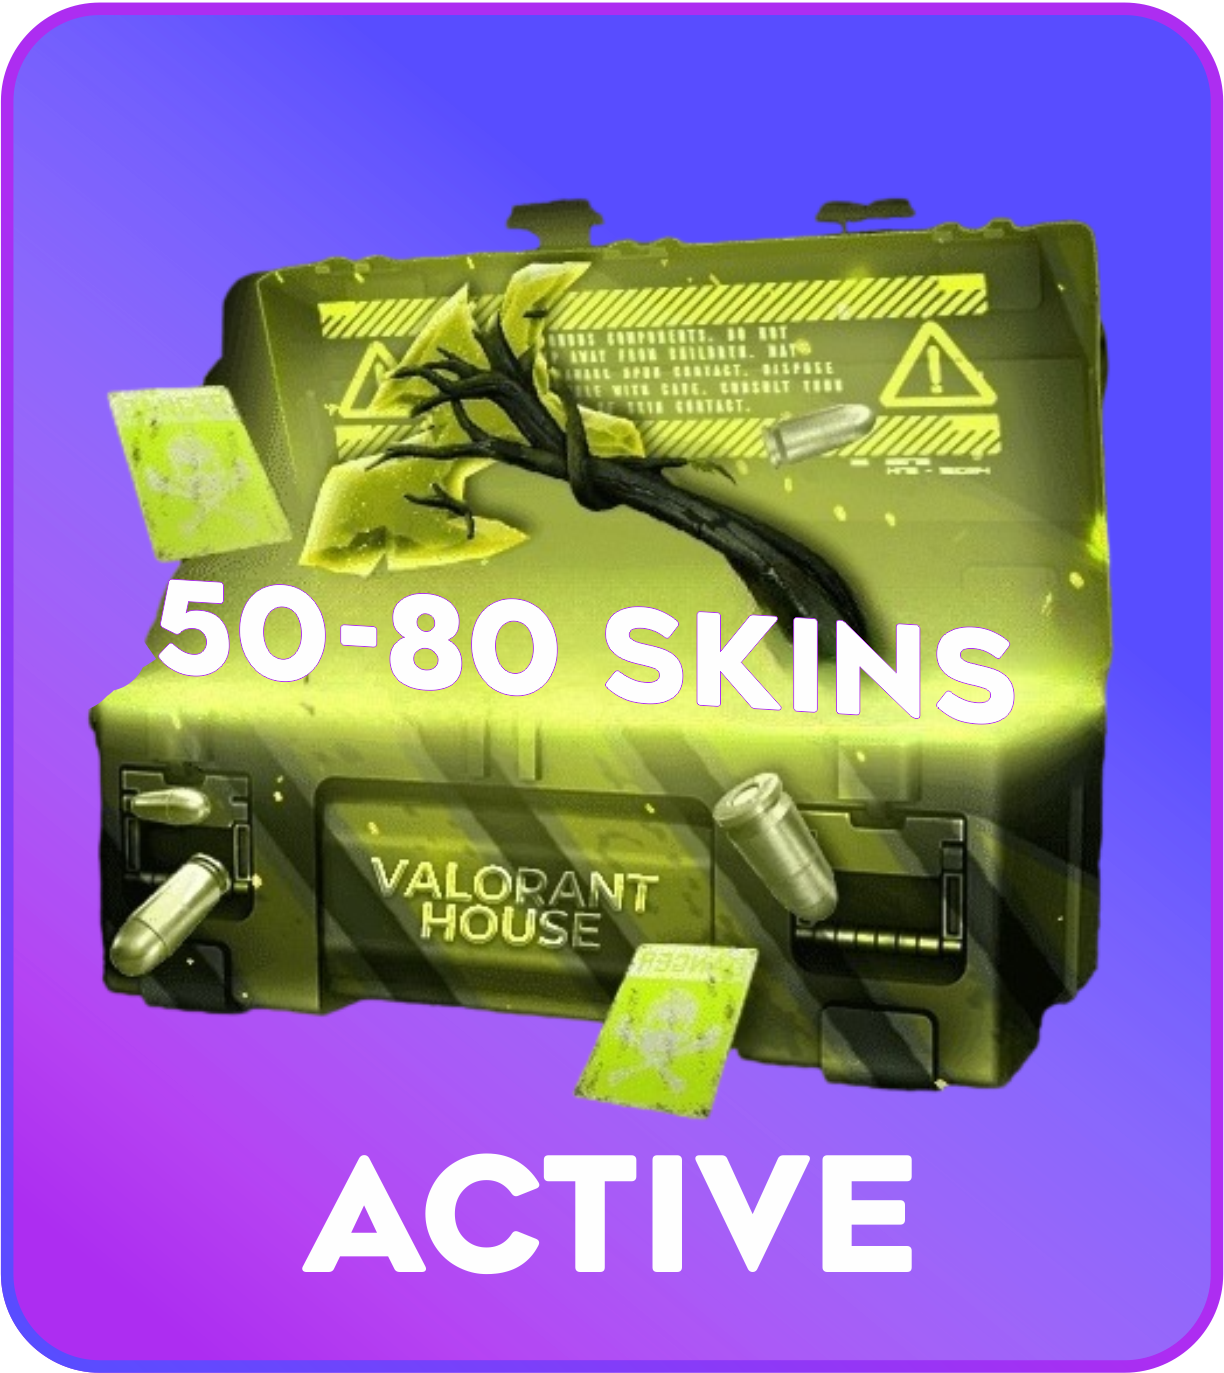 Active 50-80 skins Valorant Account